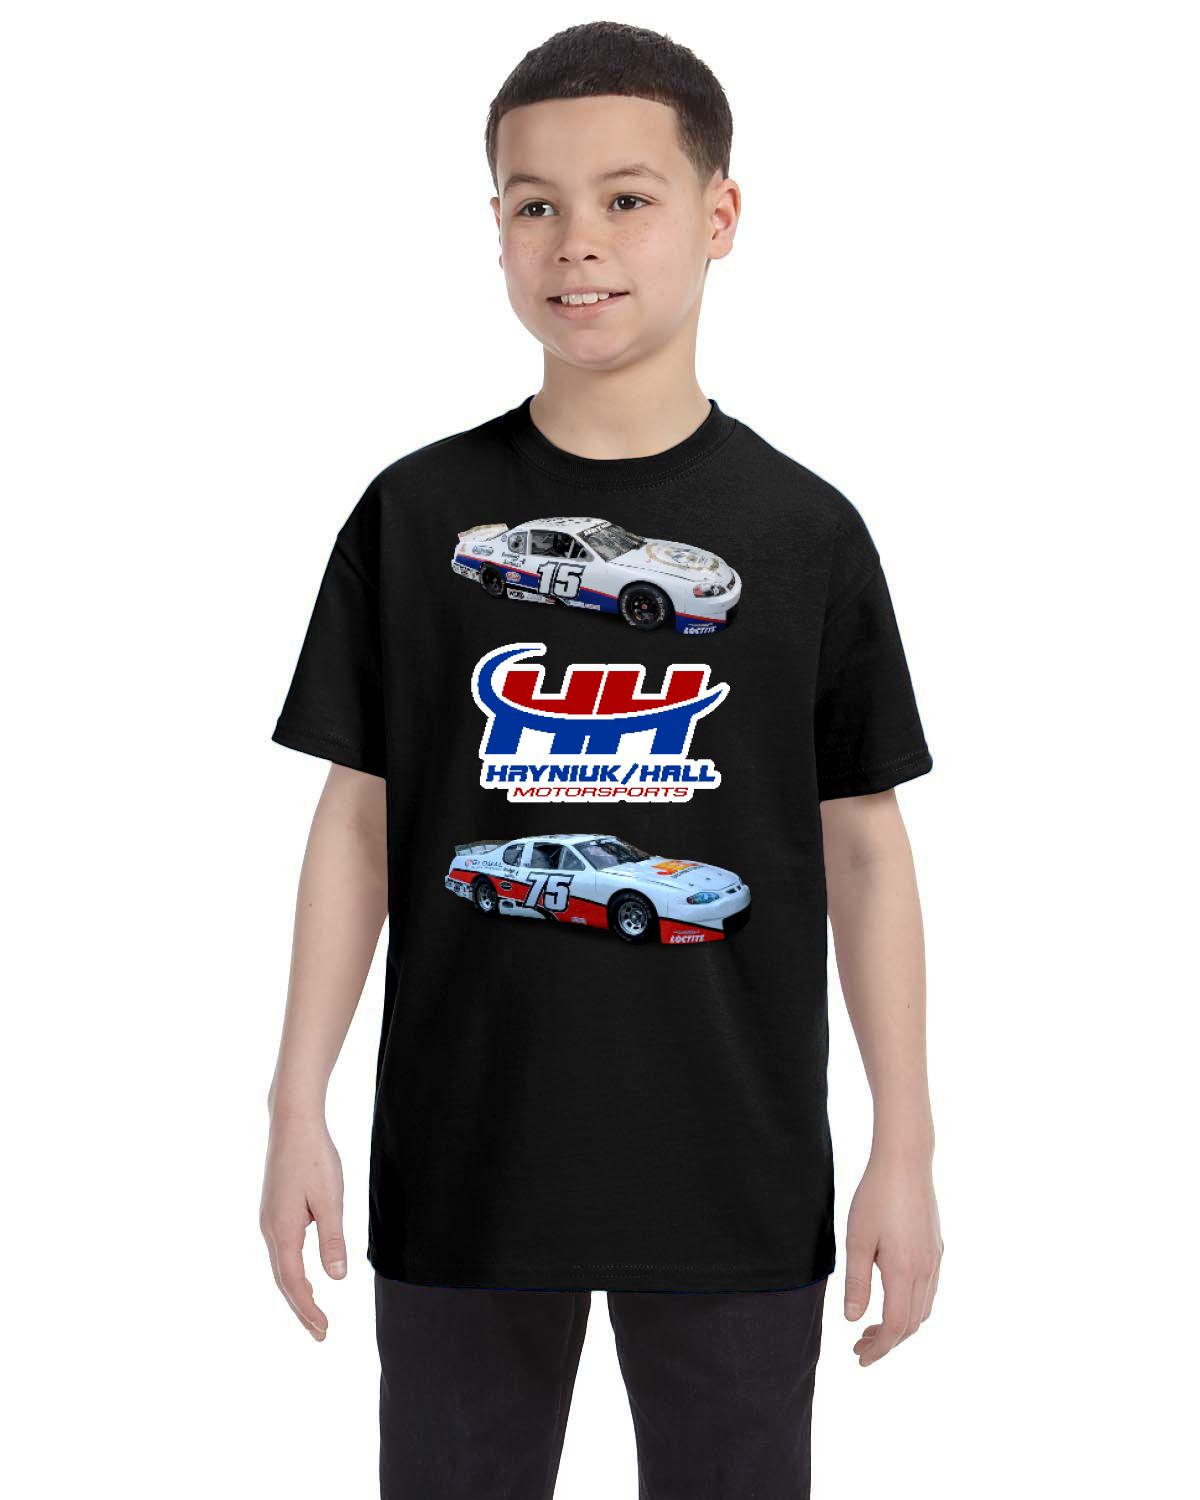 Hryniuk / Hall Motorsports Youth Tshirt